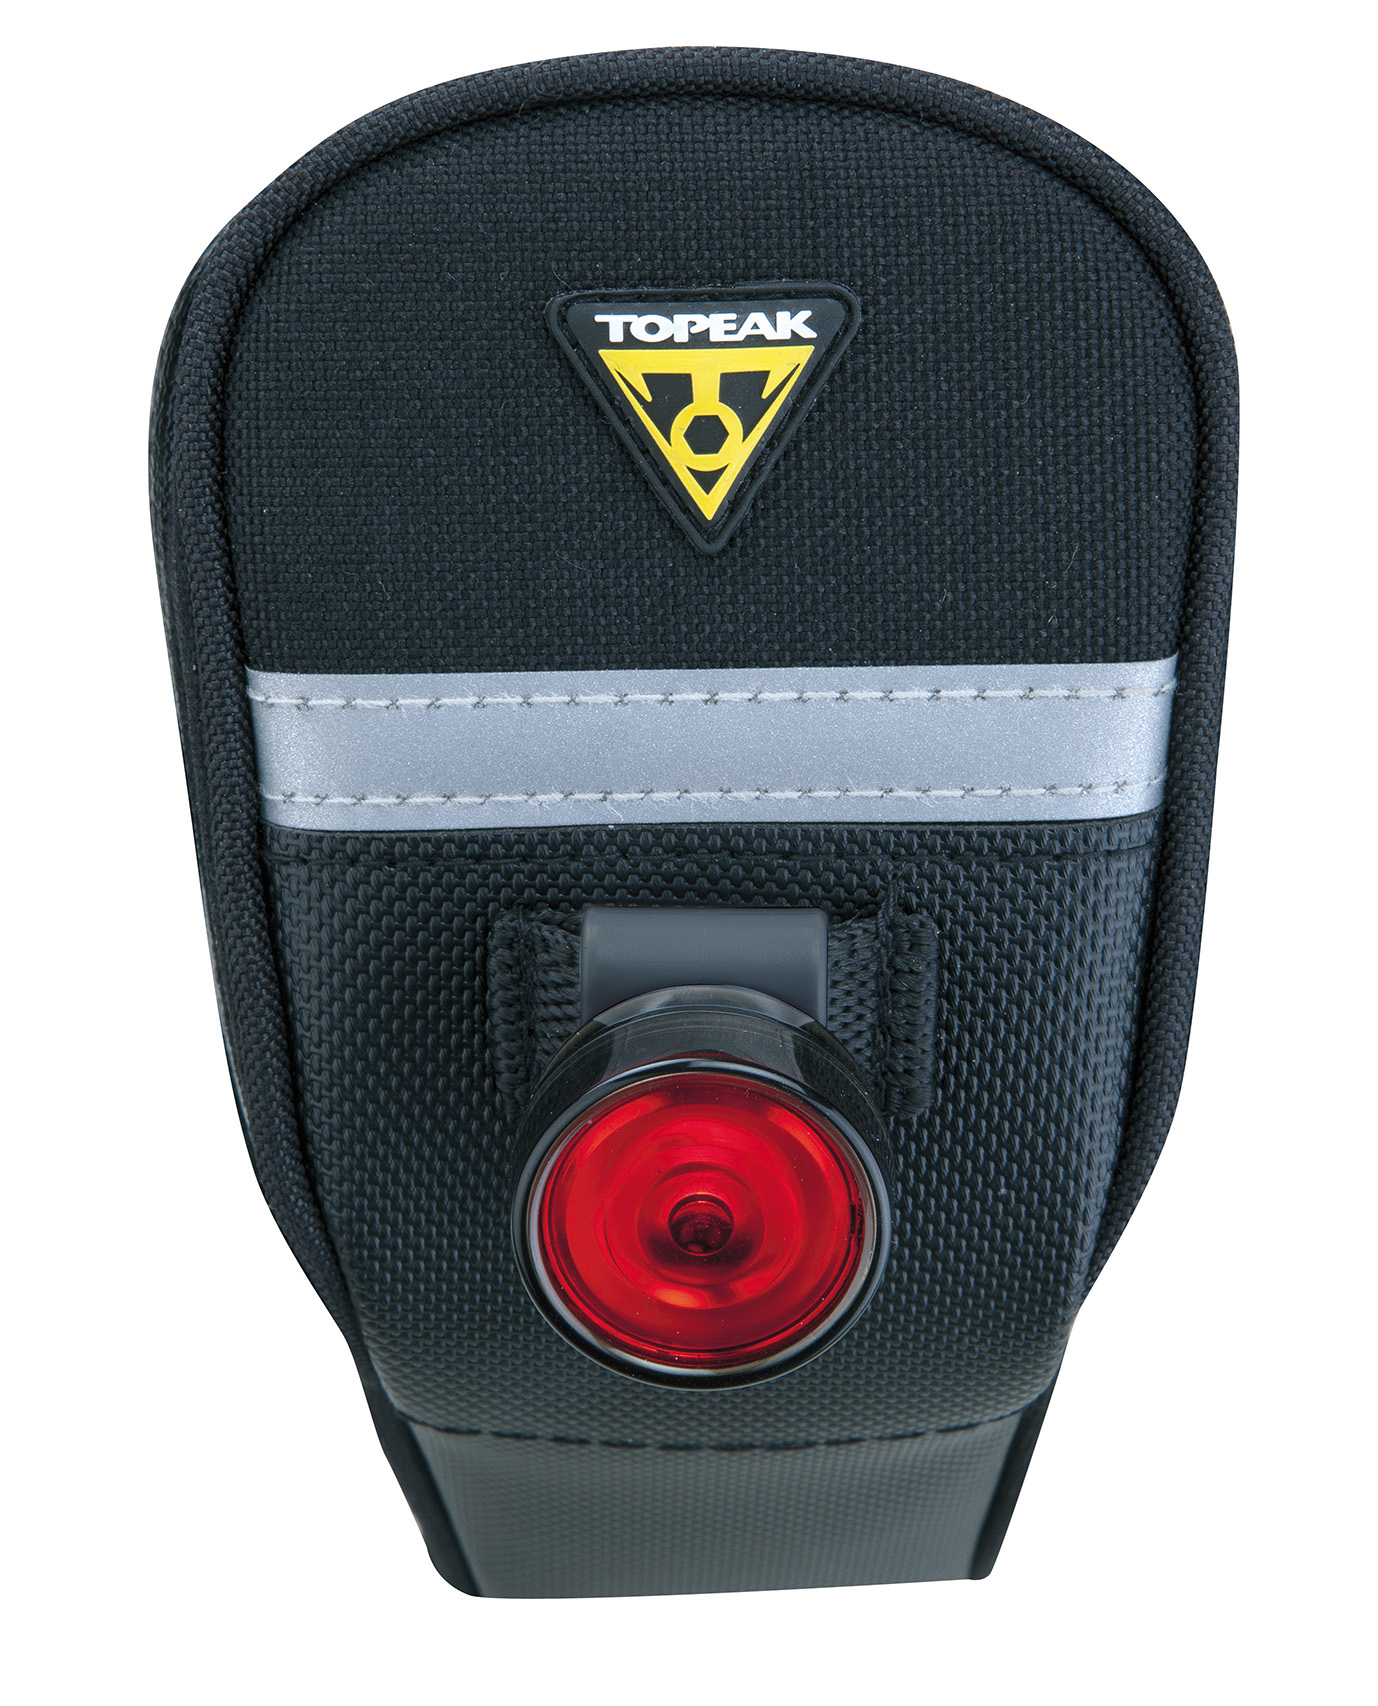 Topeak Tail Lux超輕量多用途警示燈